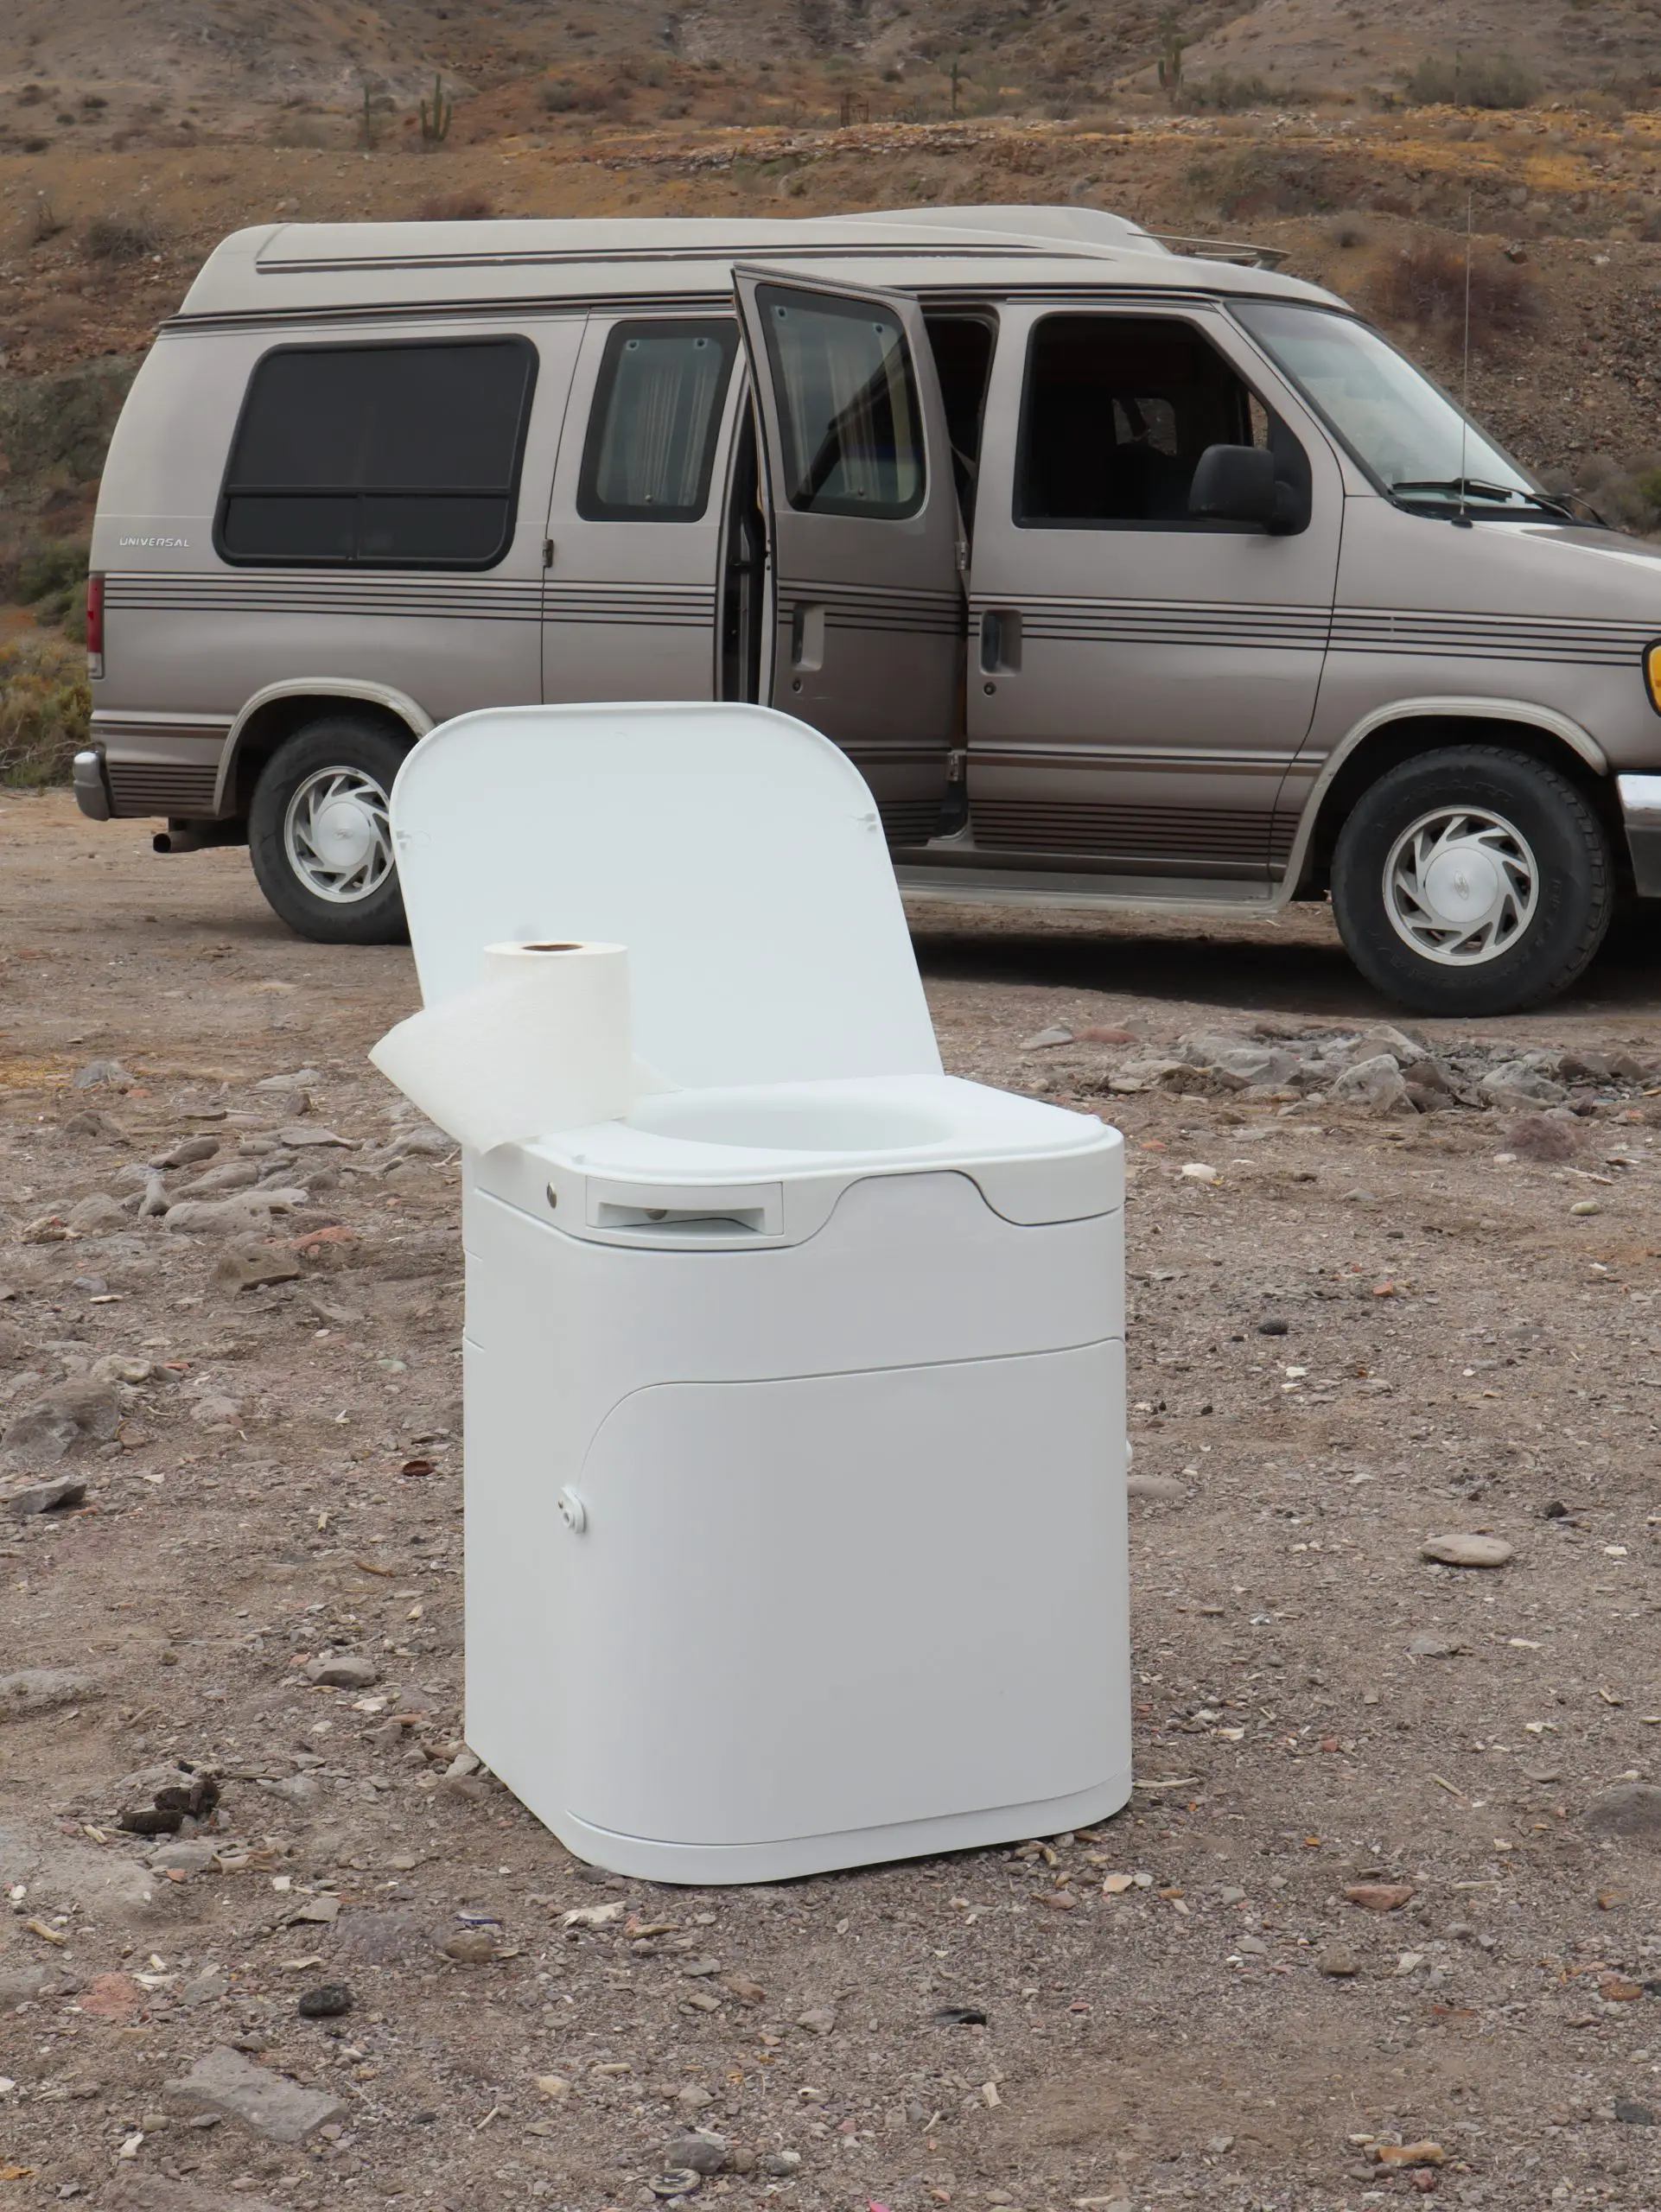 OGO Compost Toilet sitting in front of camper van